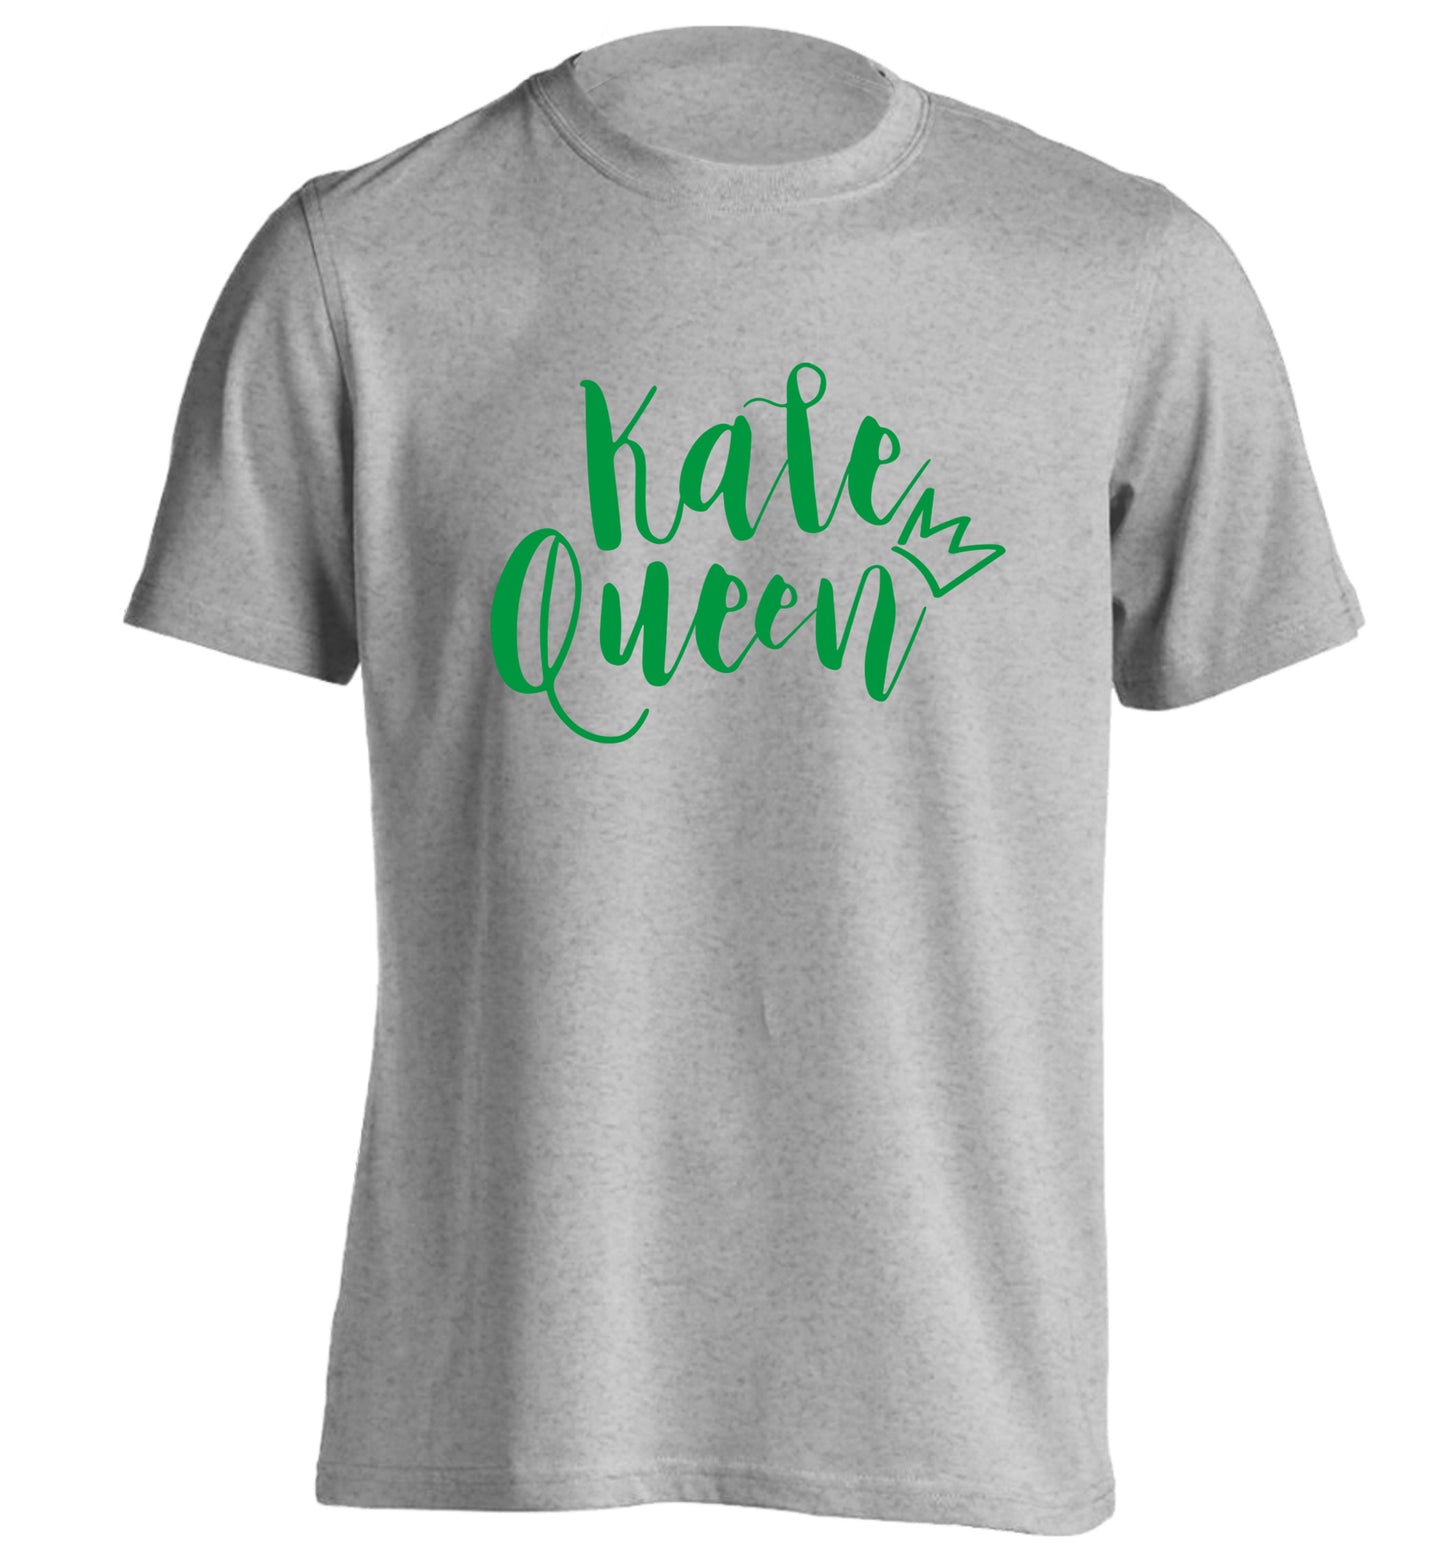 Kale Queen adults unisex grey Tshirt 2XL